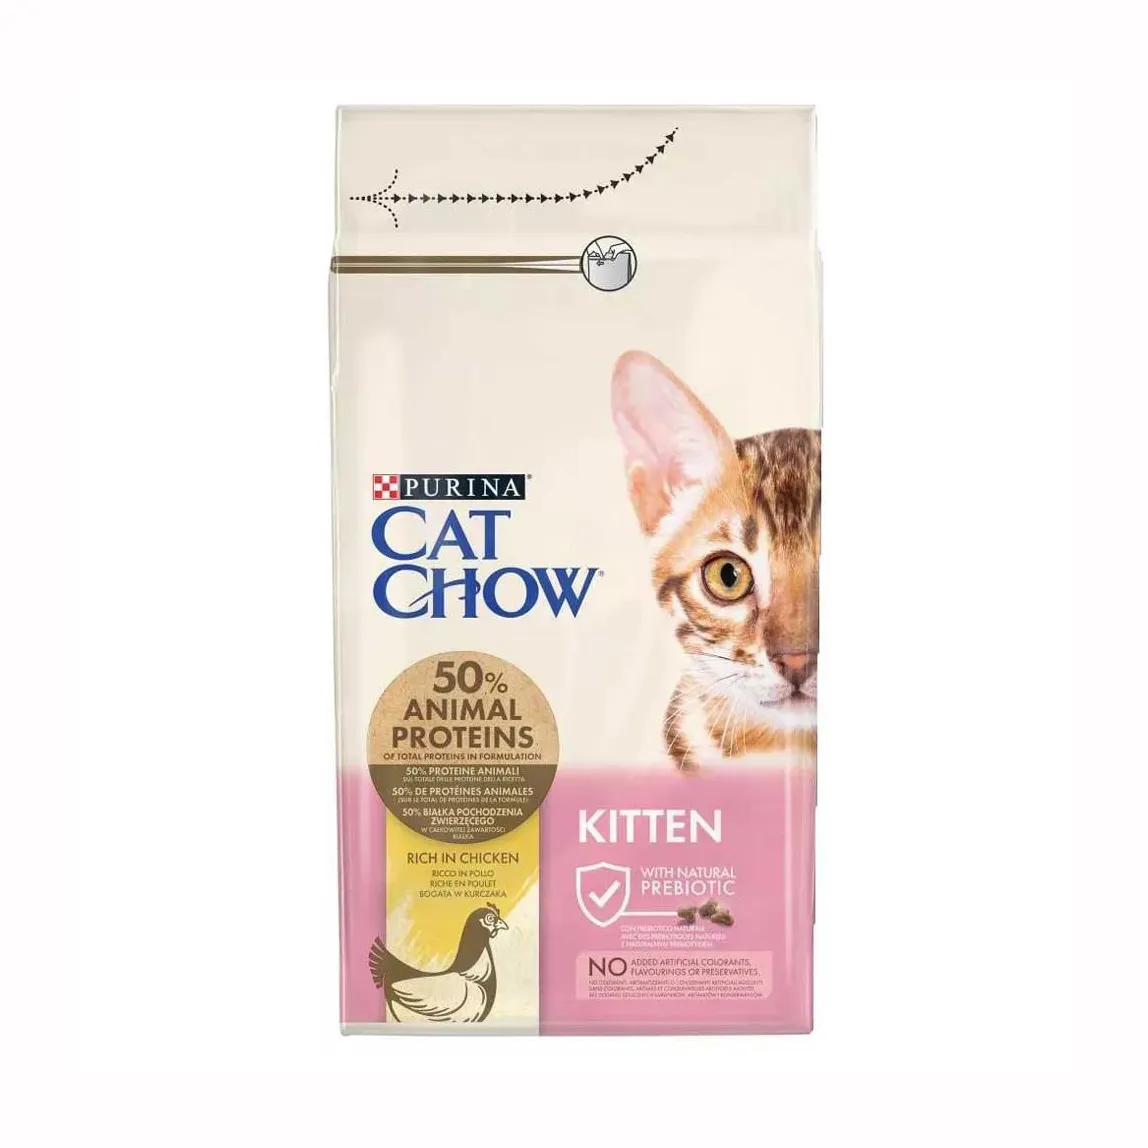 Nestlé Cat Chow 24x500ml